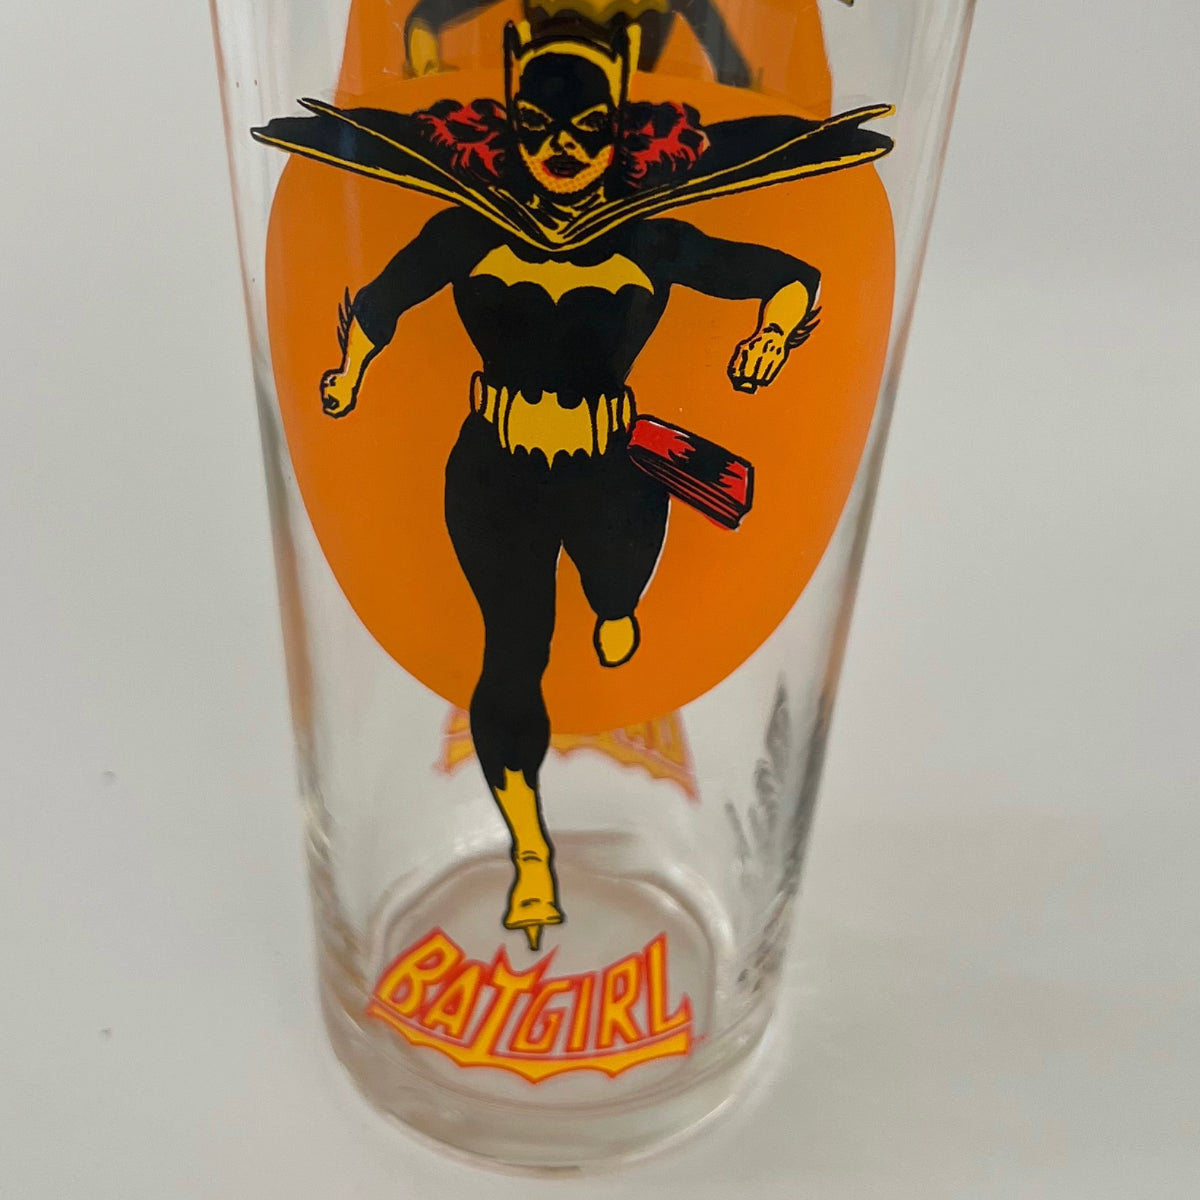 Vintage 1970s Pepsi DC Comics Batgirl Drinking Glass